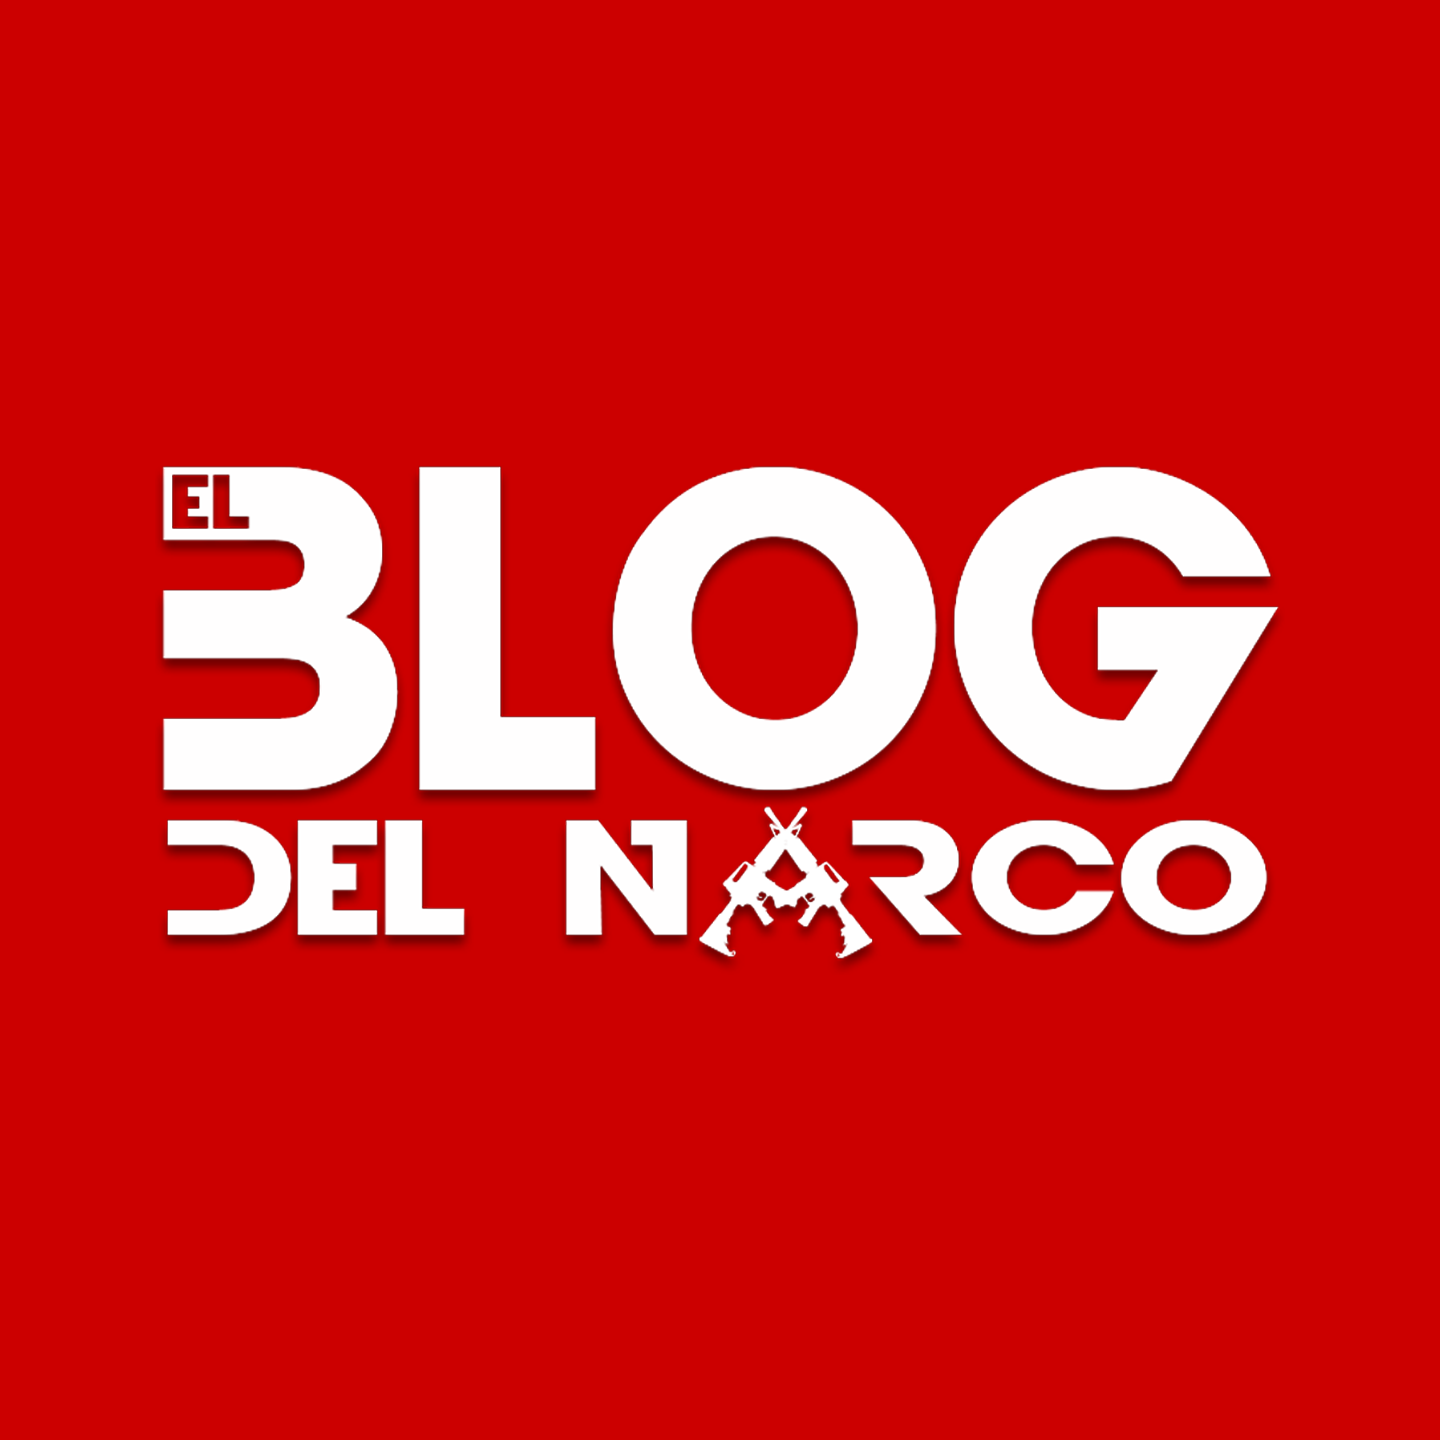 cassie sisco add blog narco videos ejecuciones photo